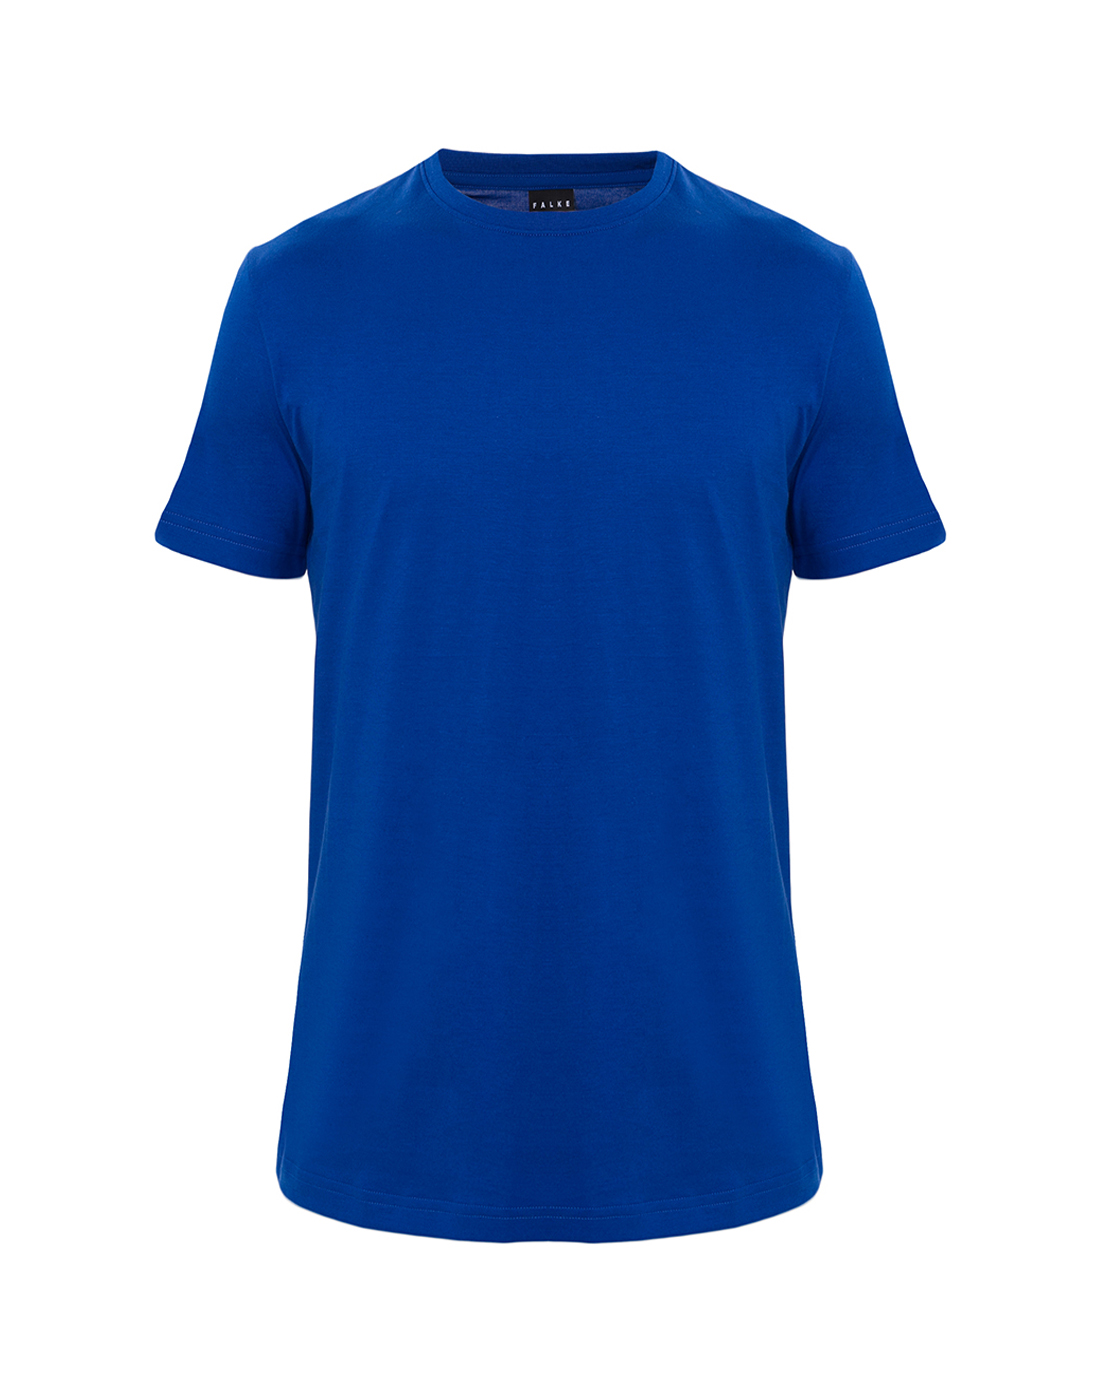 Футболка синяя мужская Falke Fashion S62104/6493/FW2324-1